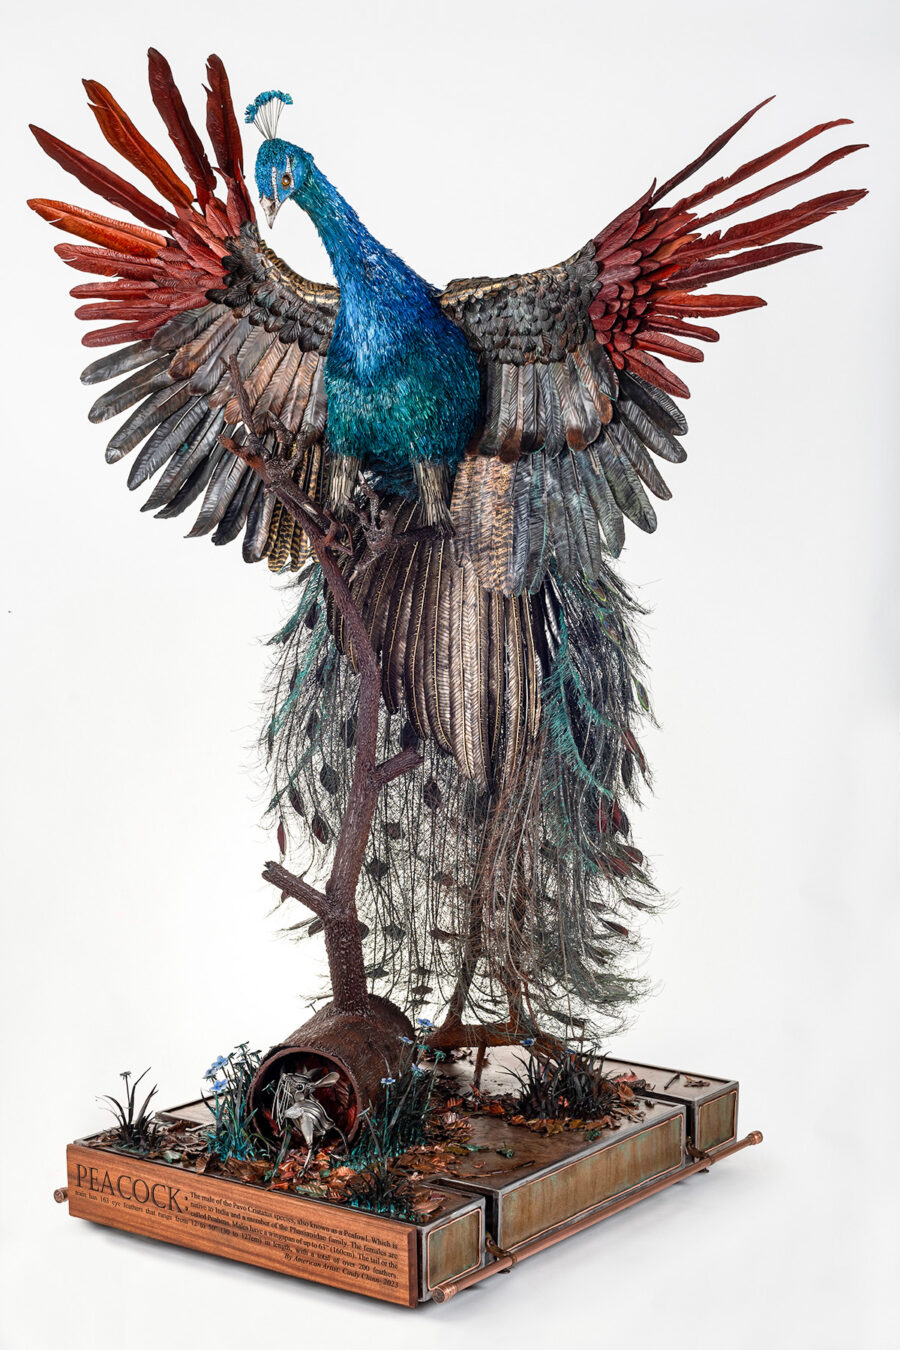 Peacock Sculpture by Cindy Chinn - 18